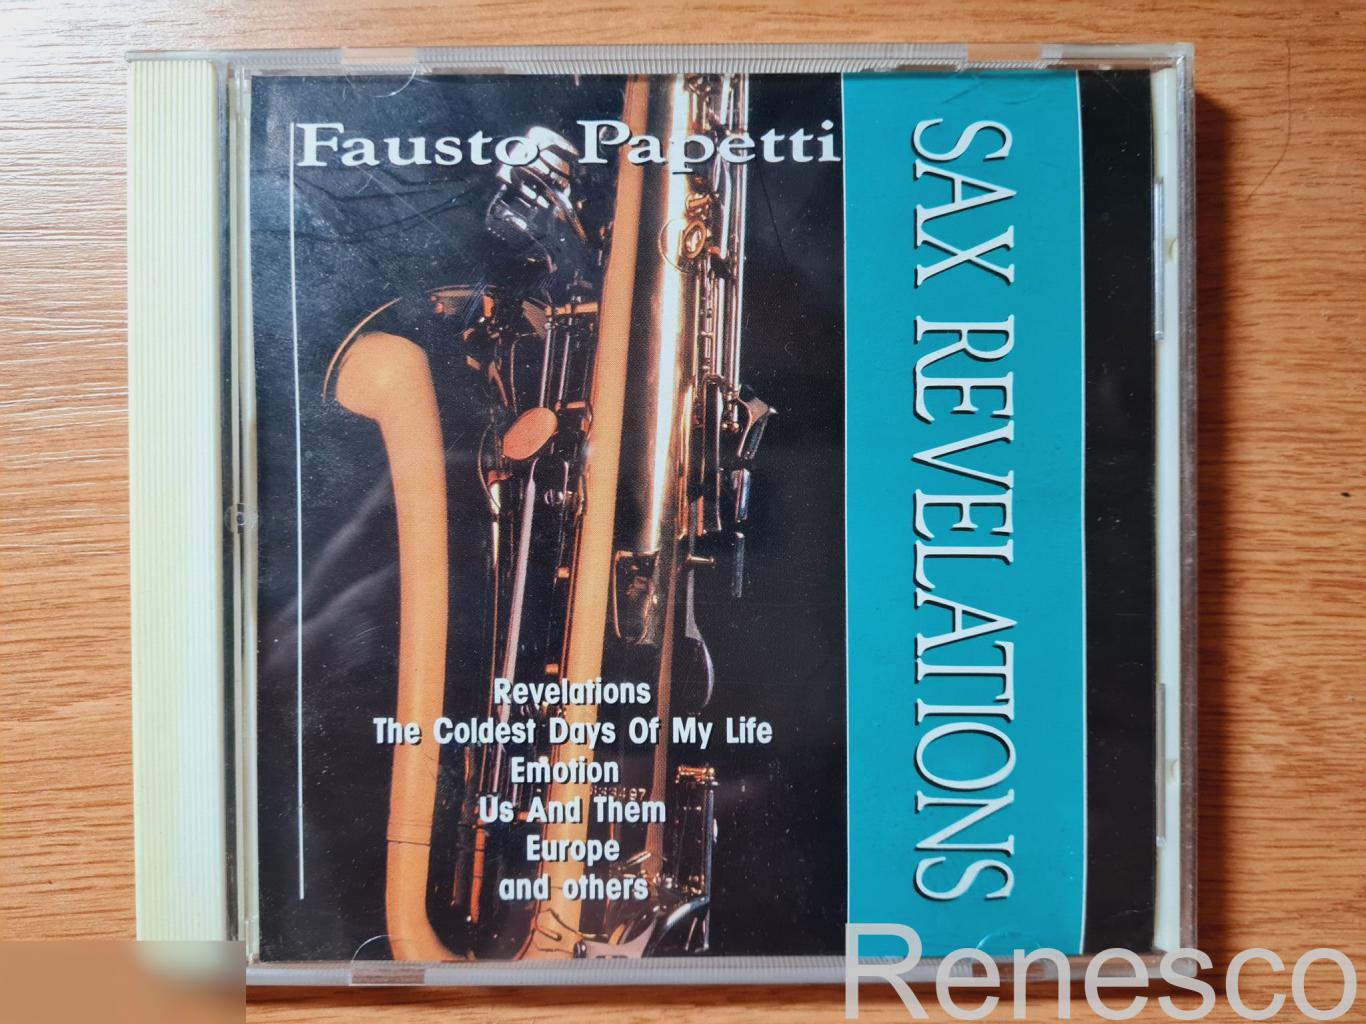 Fausto Papetti – Sax Revelations (Germany) (1988)